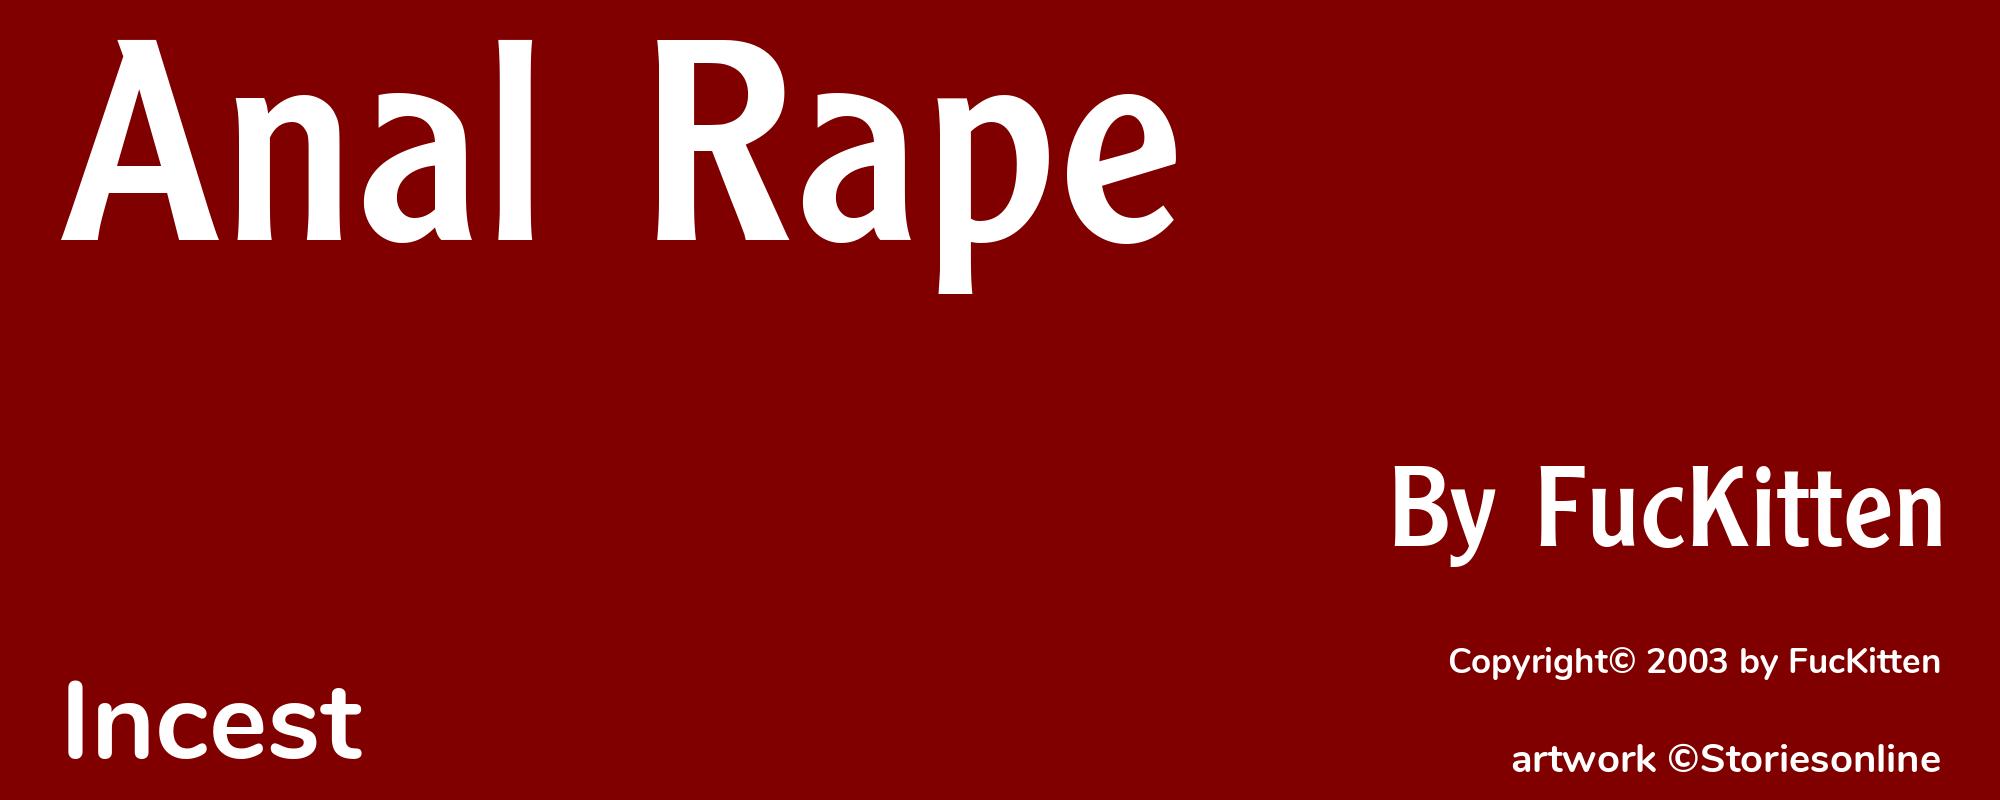 Anal Rape - Cover